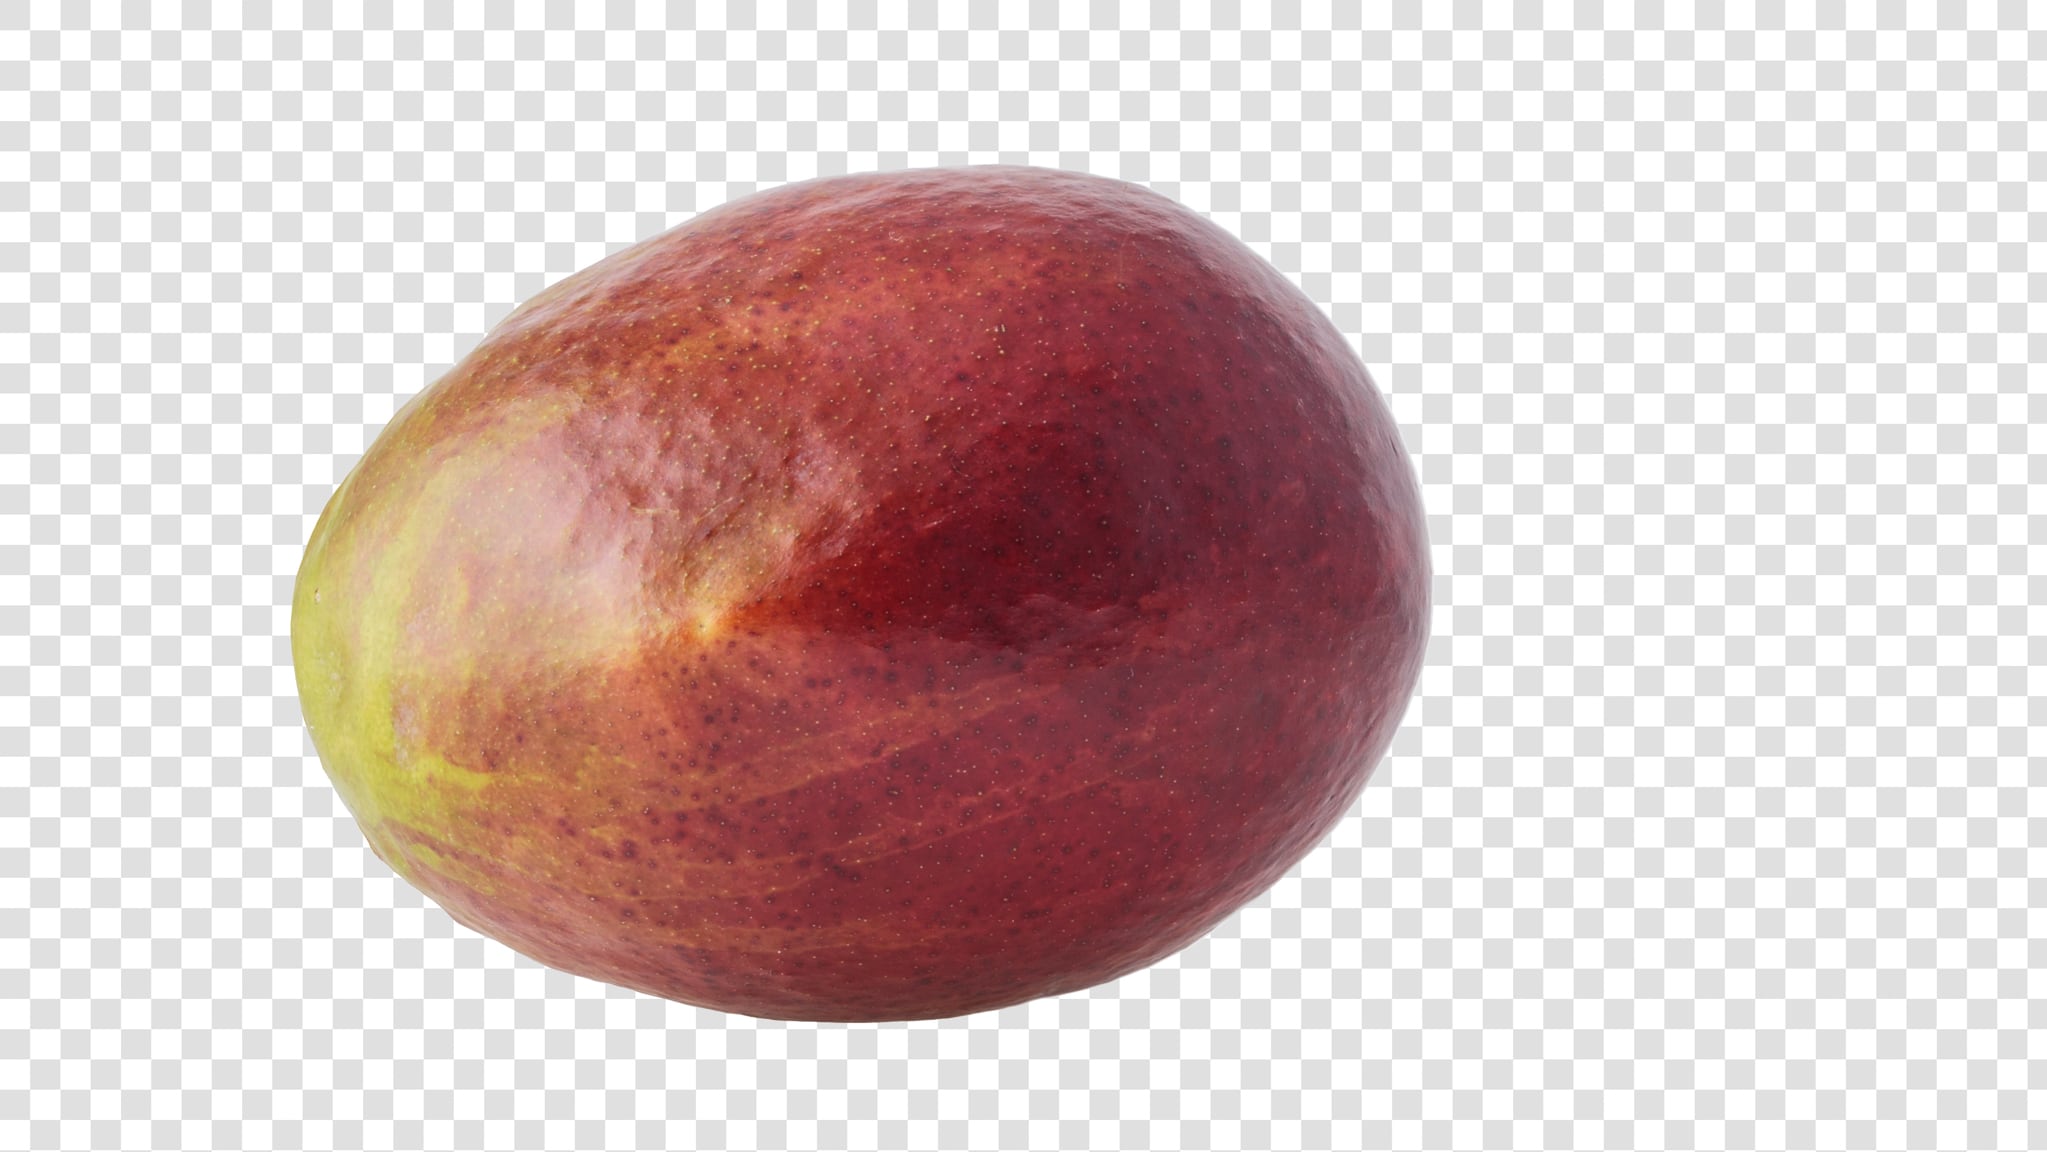 Mango PSD image with transparent background